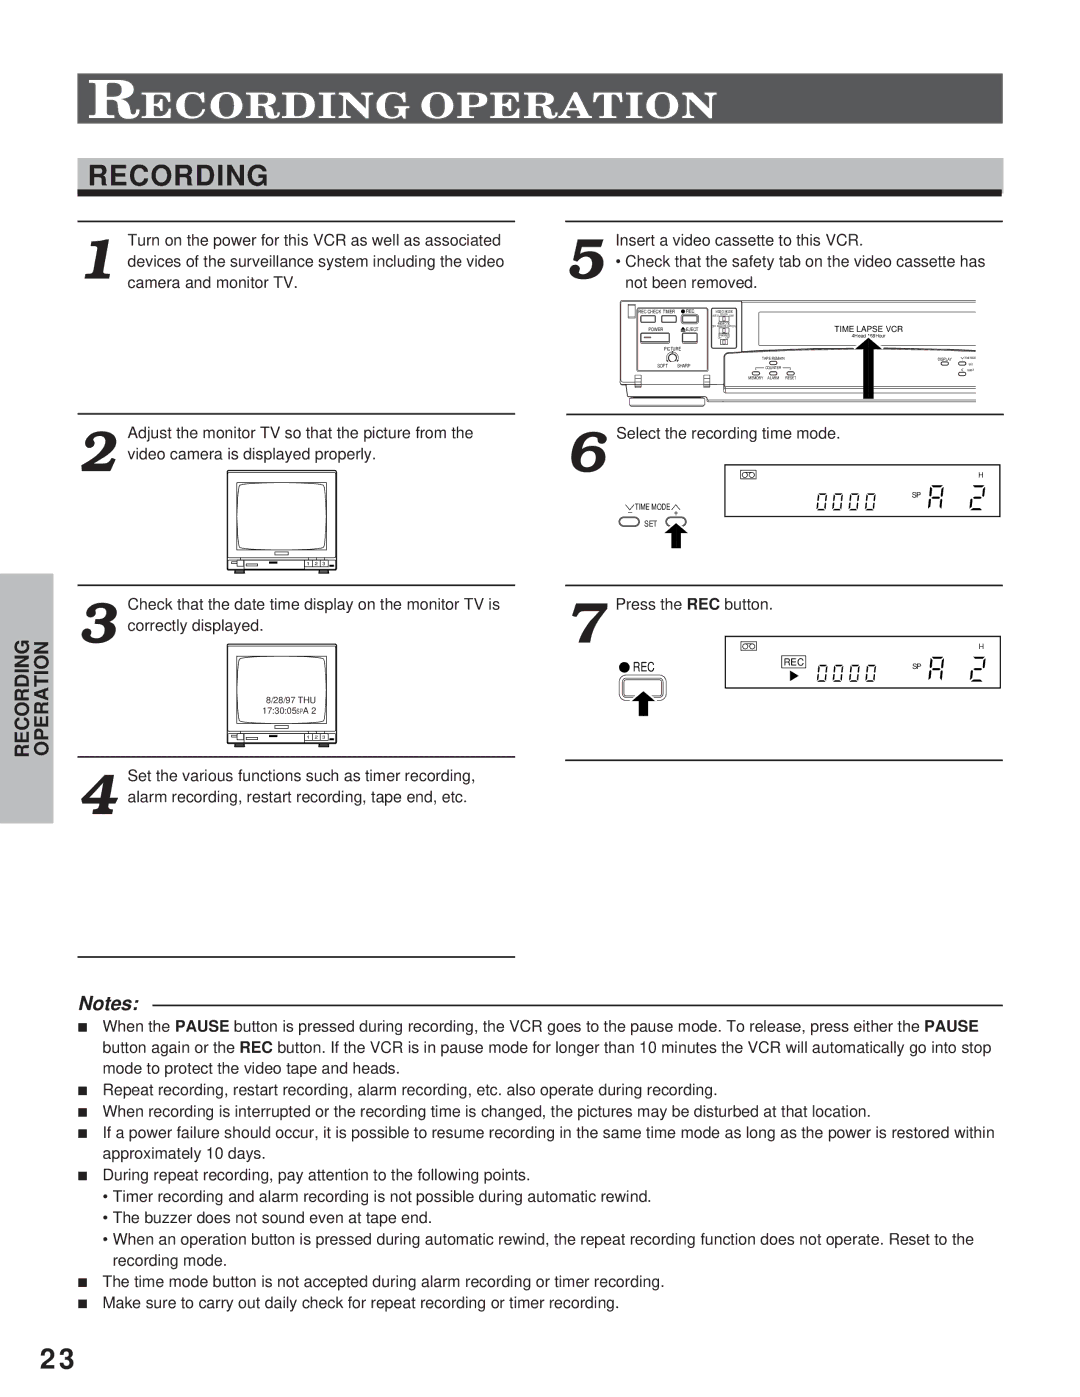 Toshiba kV-9168A instruction manual Recording, Camera and monitor TV 